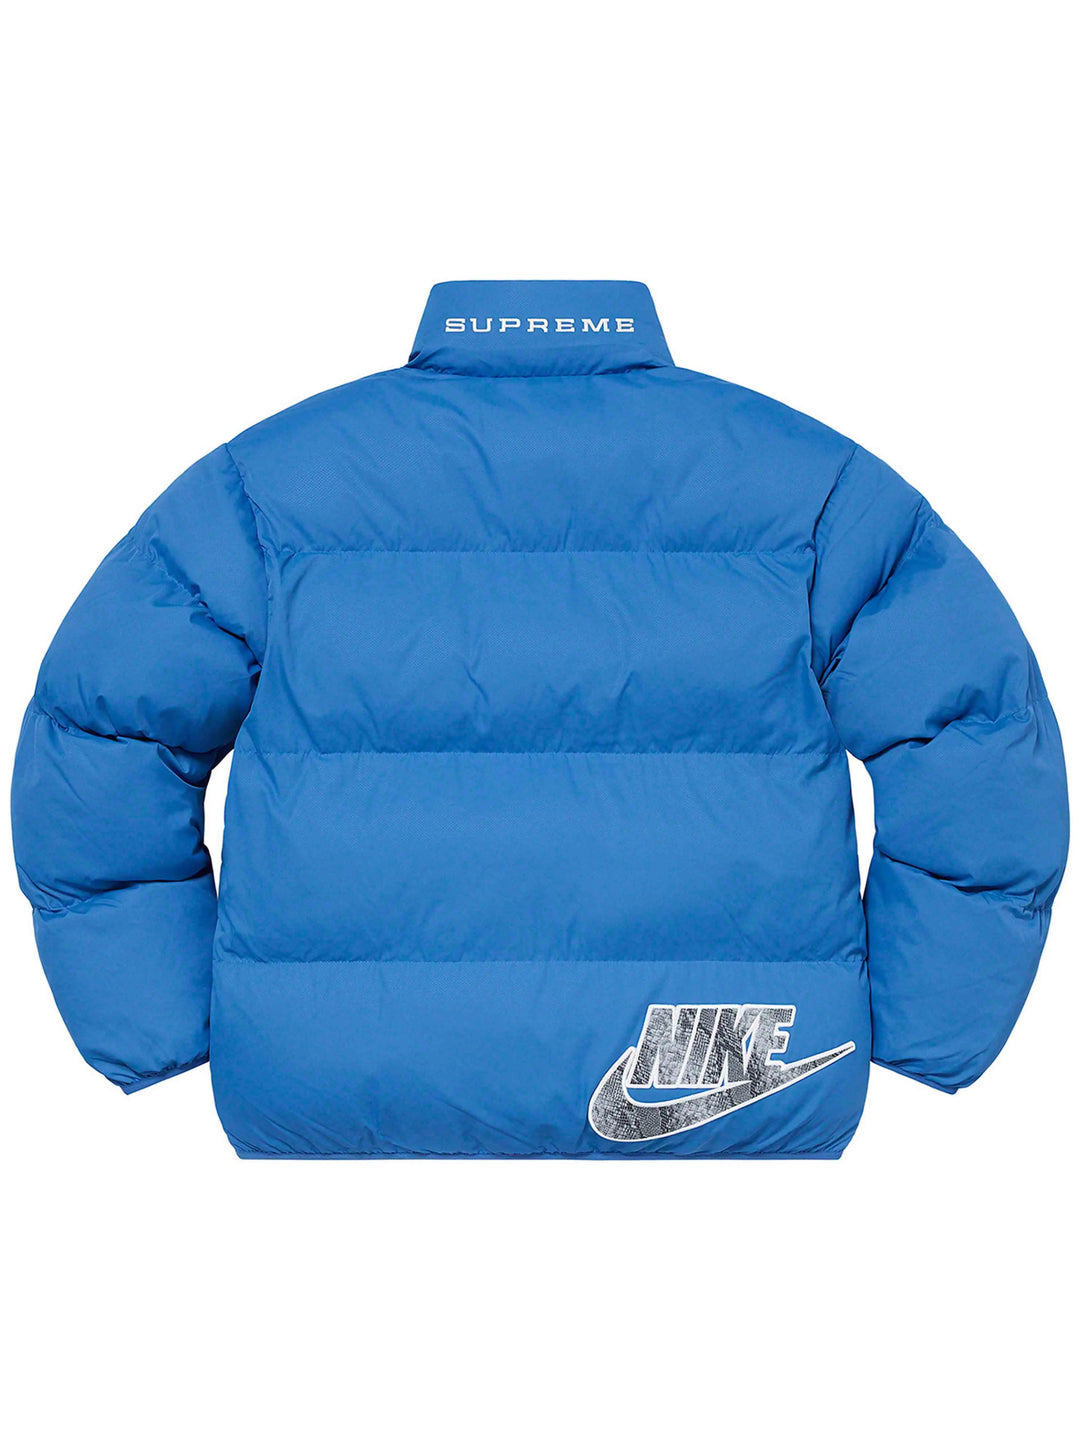 Supreme X Nike Reversible Puffer Jacket Blue [SS21] Prior